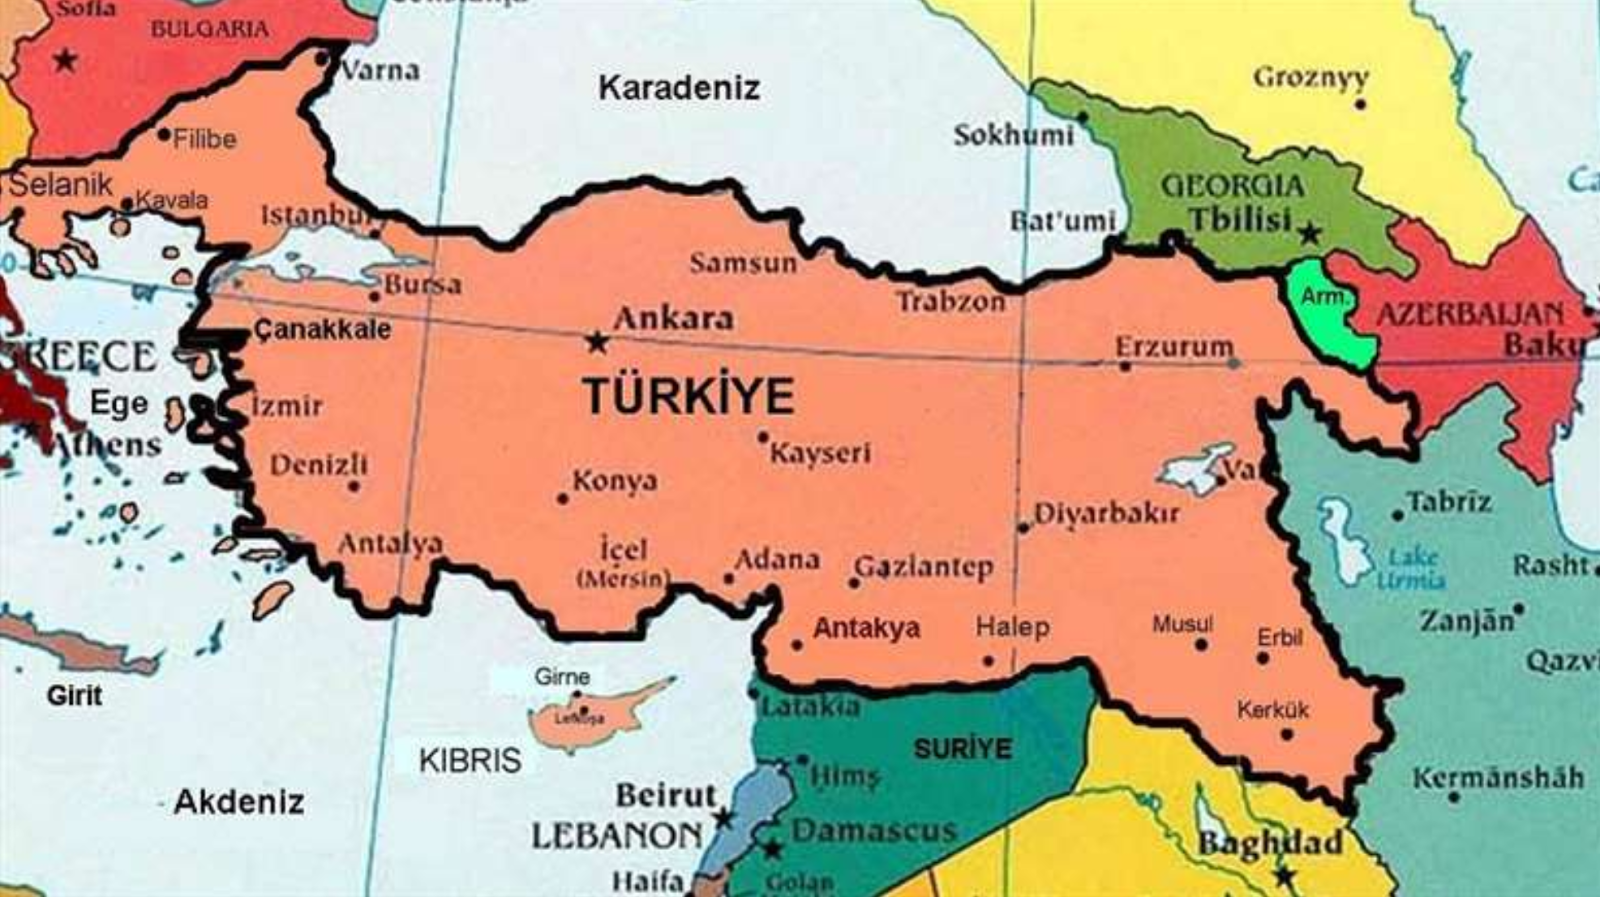 Erdogan wants Mosul, Kirkuk, and Aleppo to be part of Turkey ...